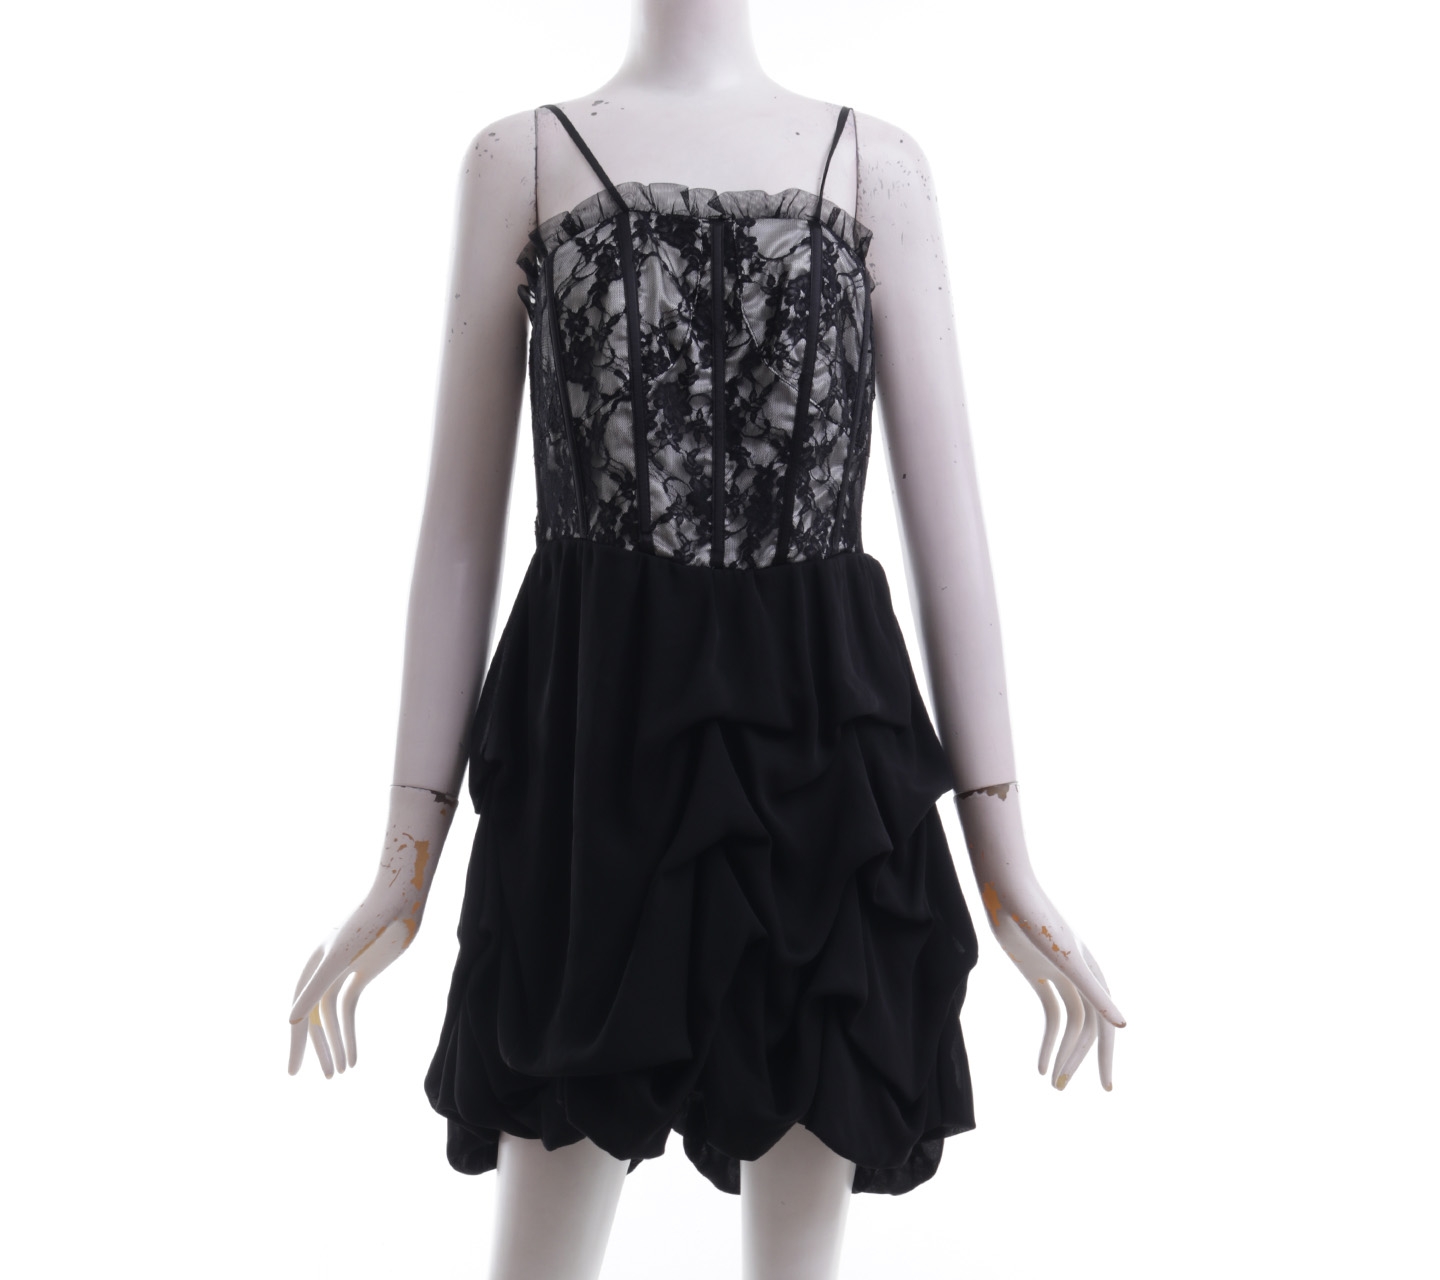 Valley Girl Black Patterned Lace Mini Dress